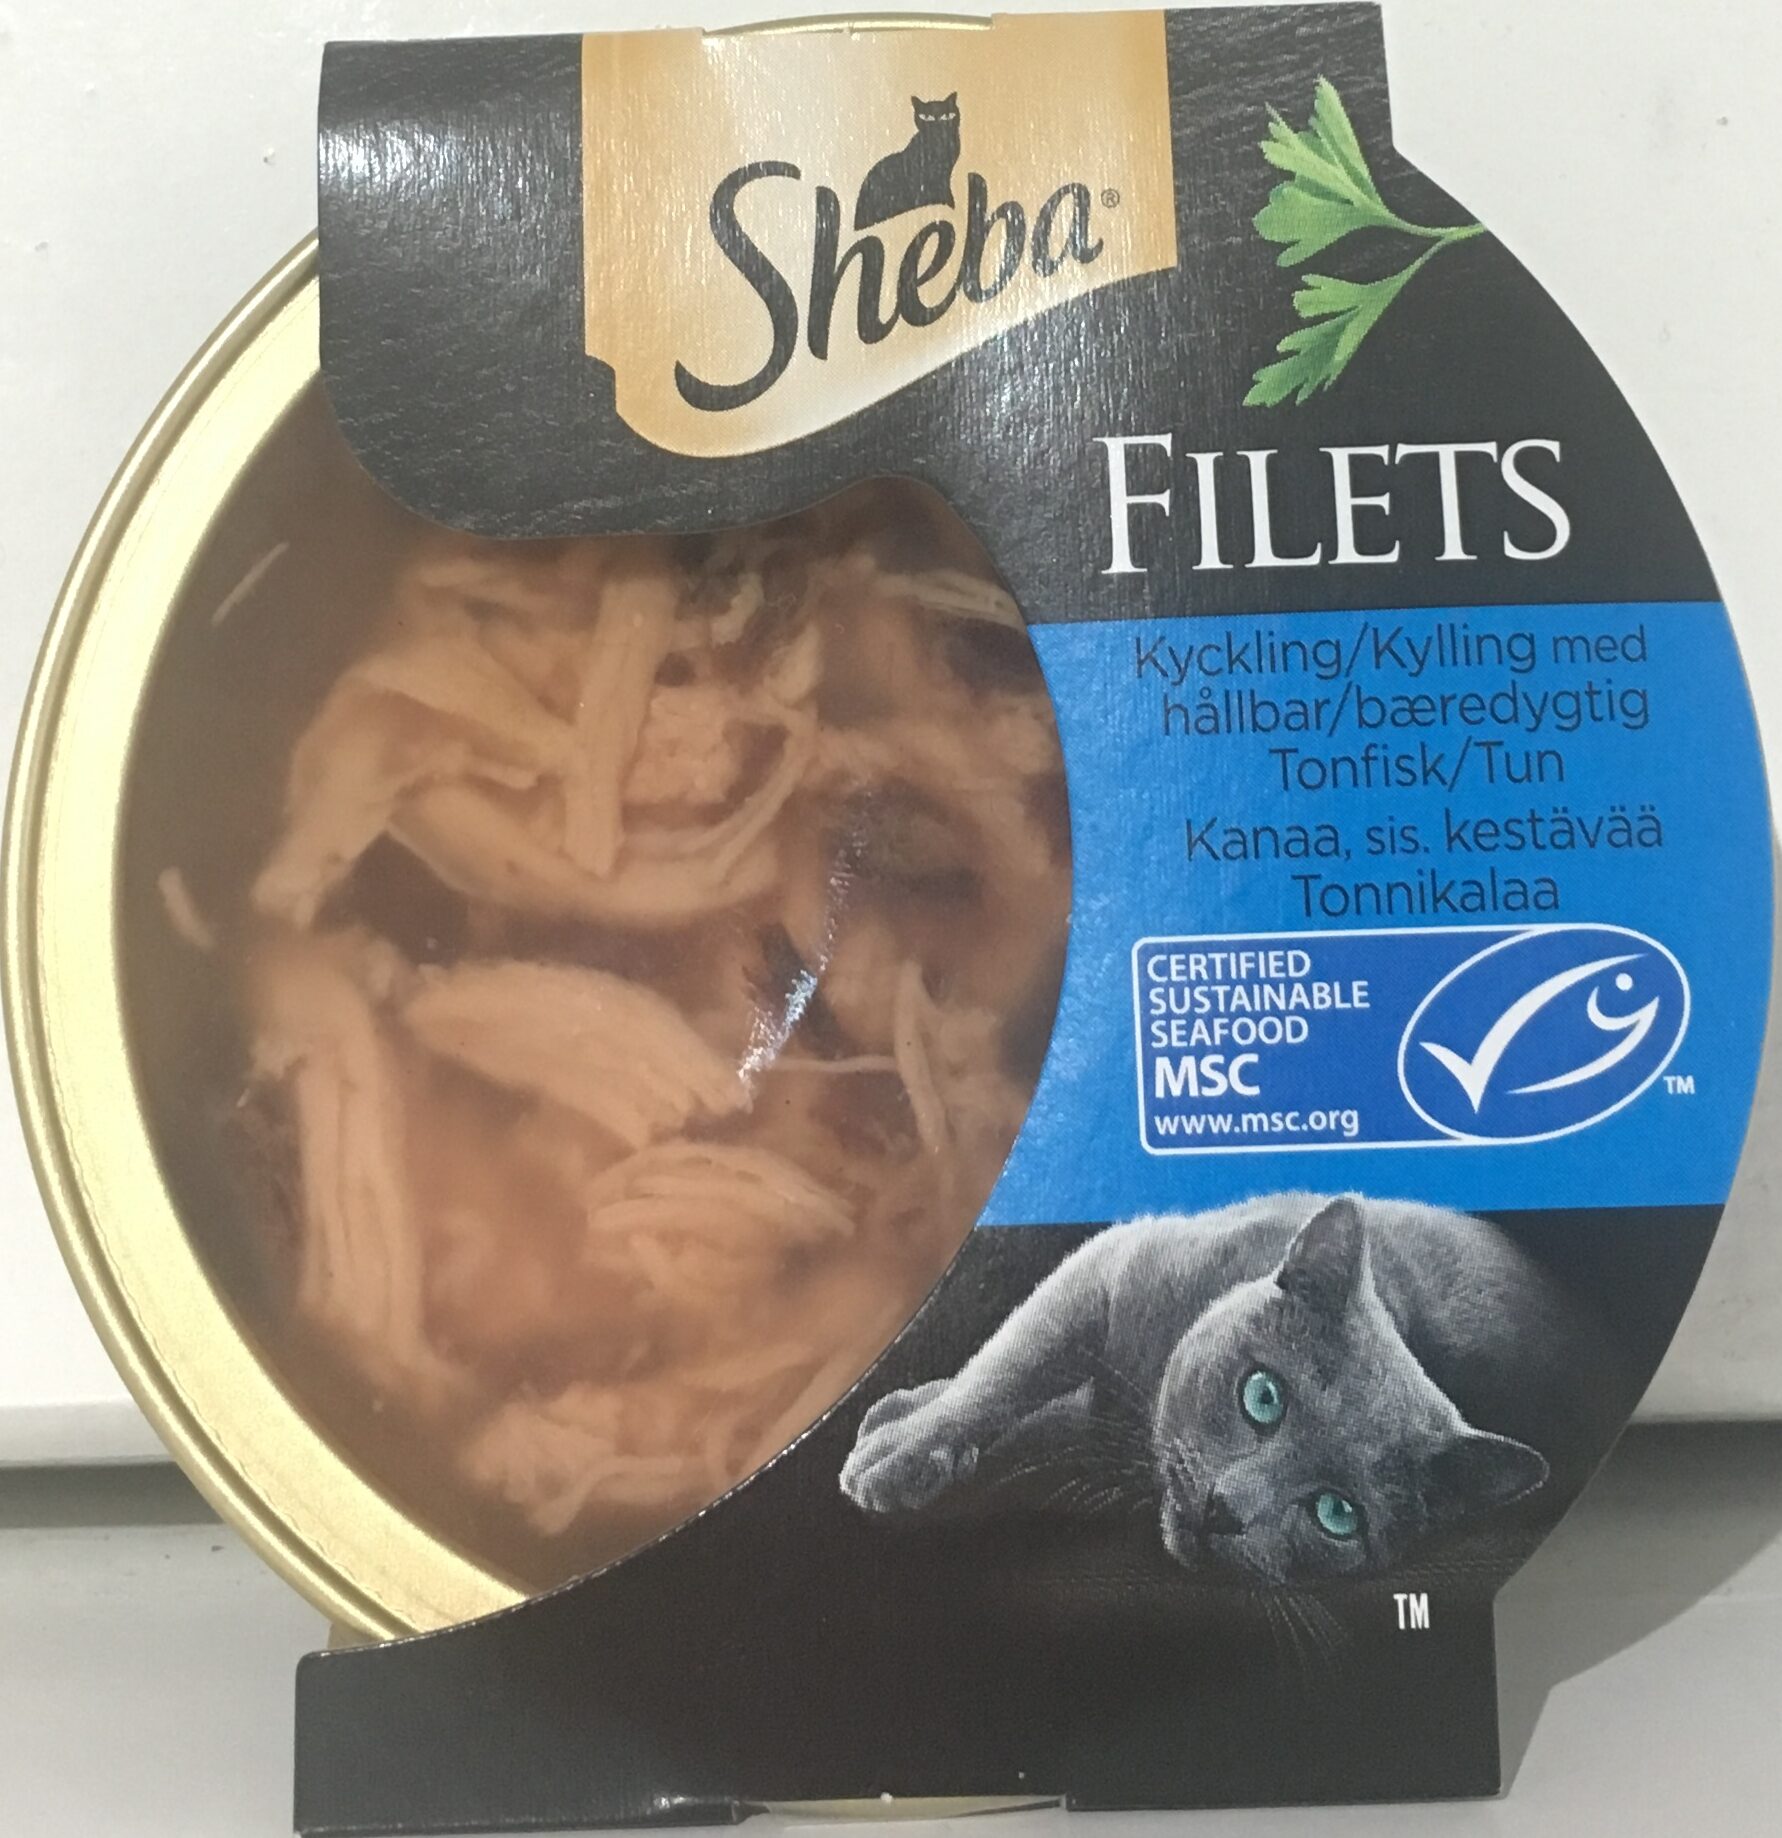 Sheba Filets med bærekraftig tunfisk - Product - en